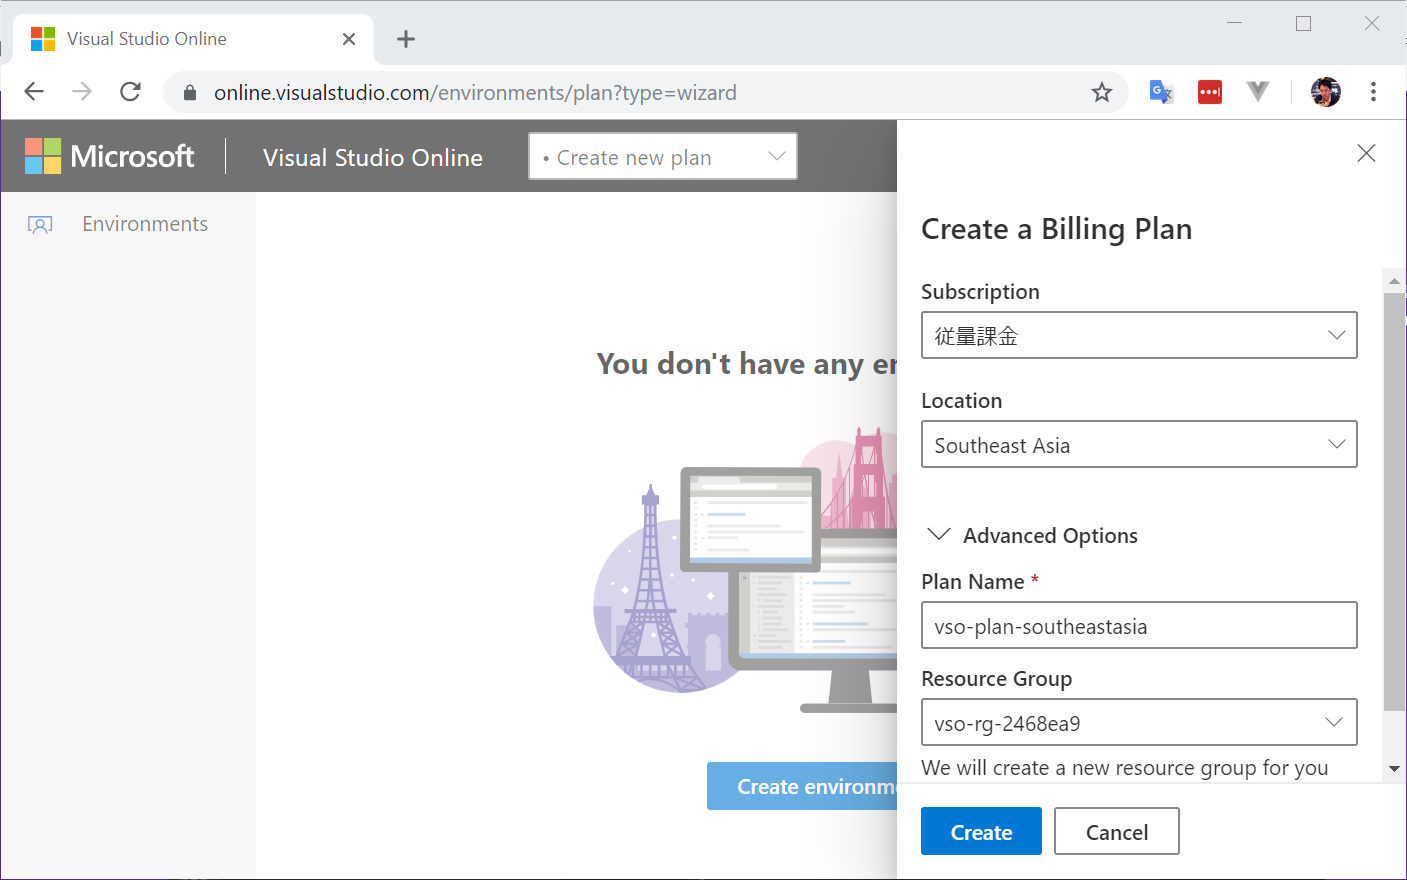 Visual Studio Online - Google Chrome 2019-11-05 10.02.28.png